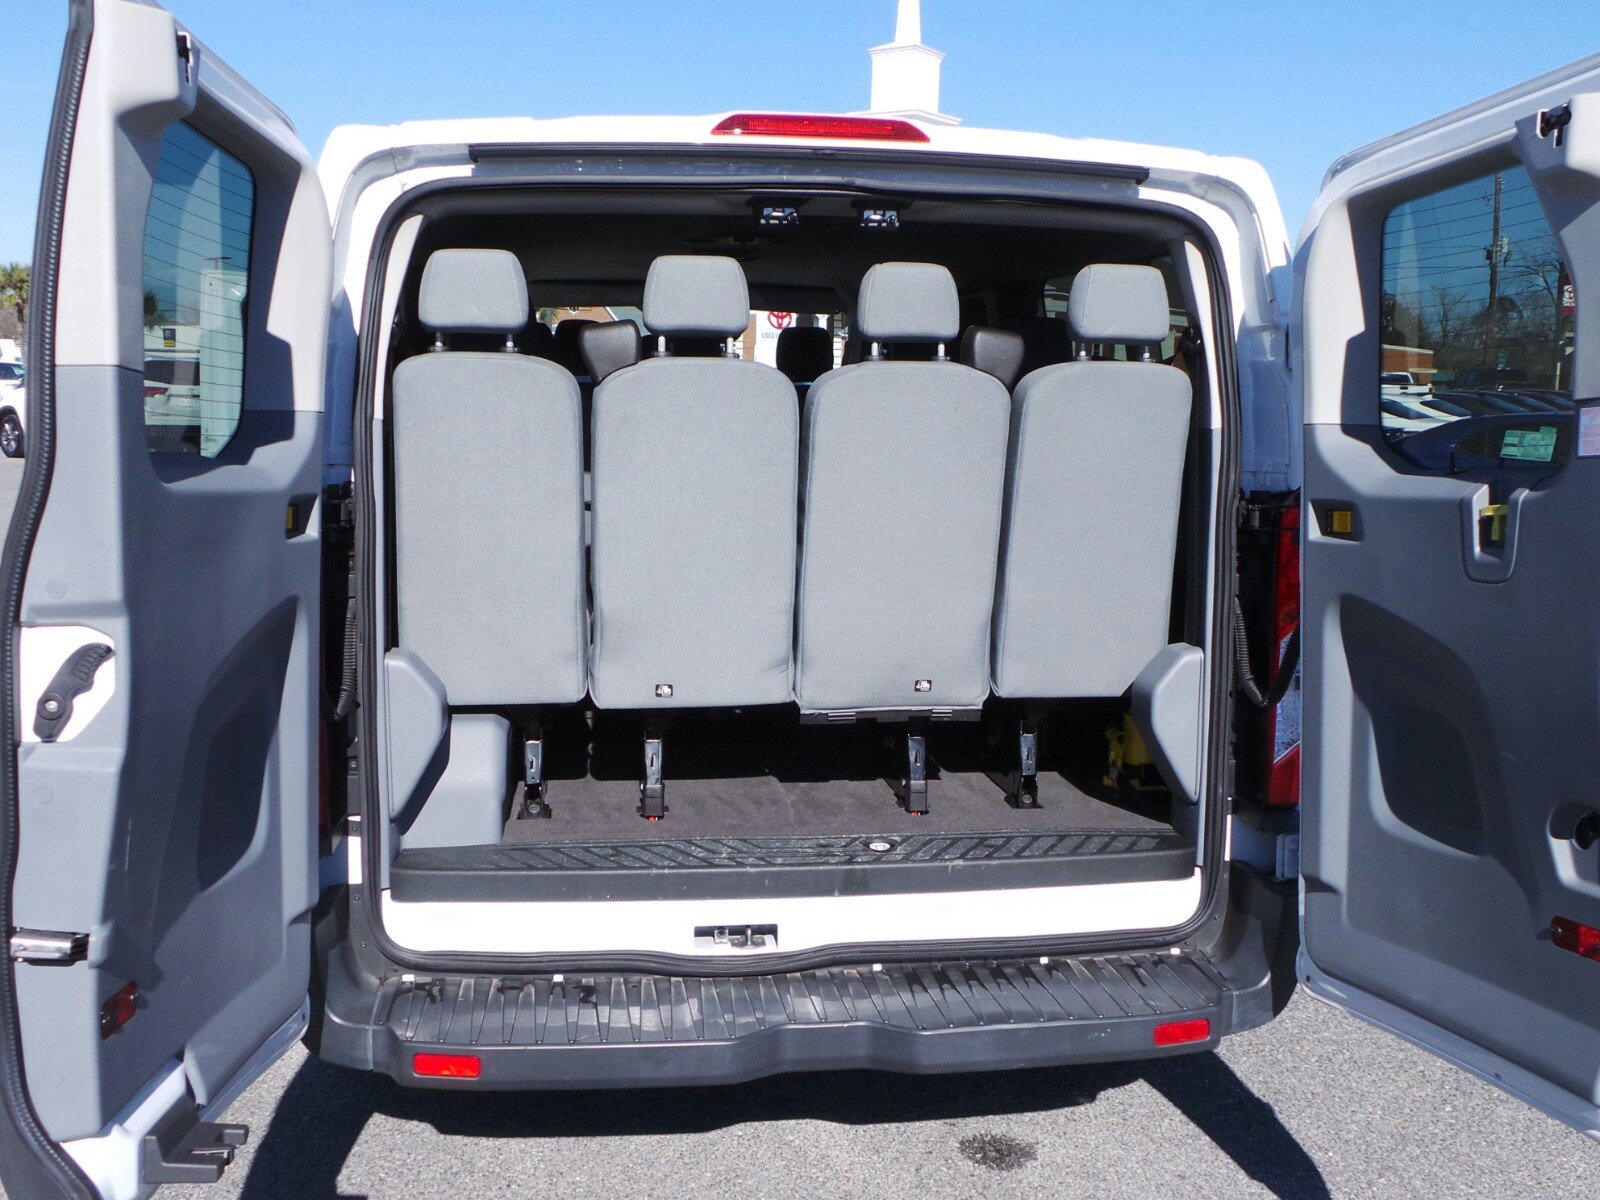 Ford transit 15 passenger van interior layout - hisatwin